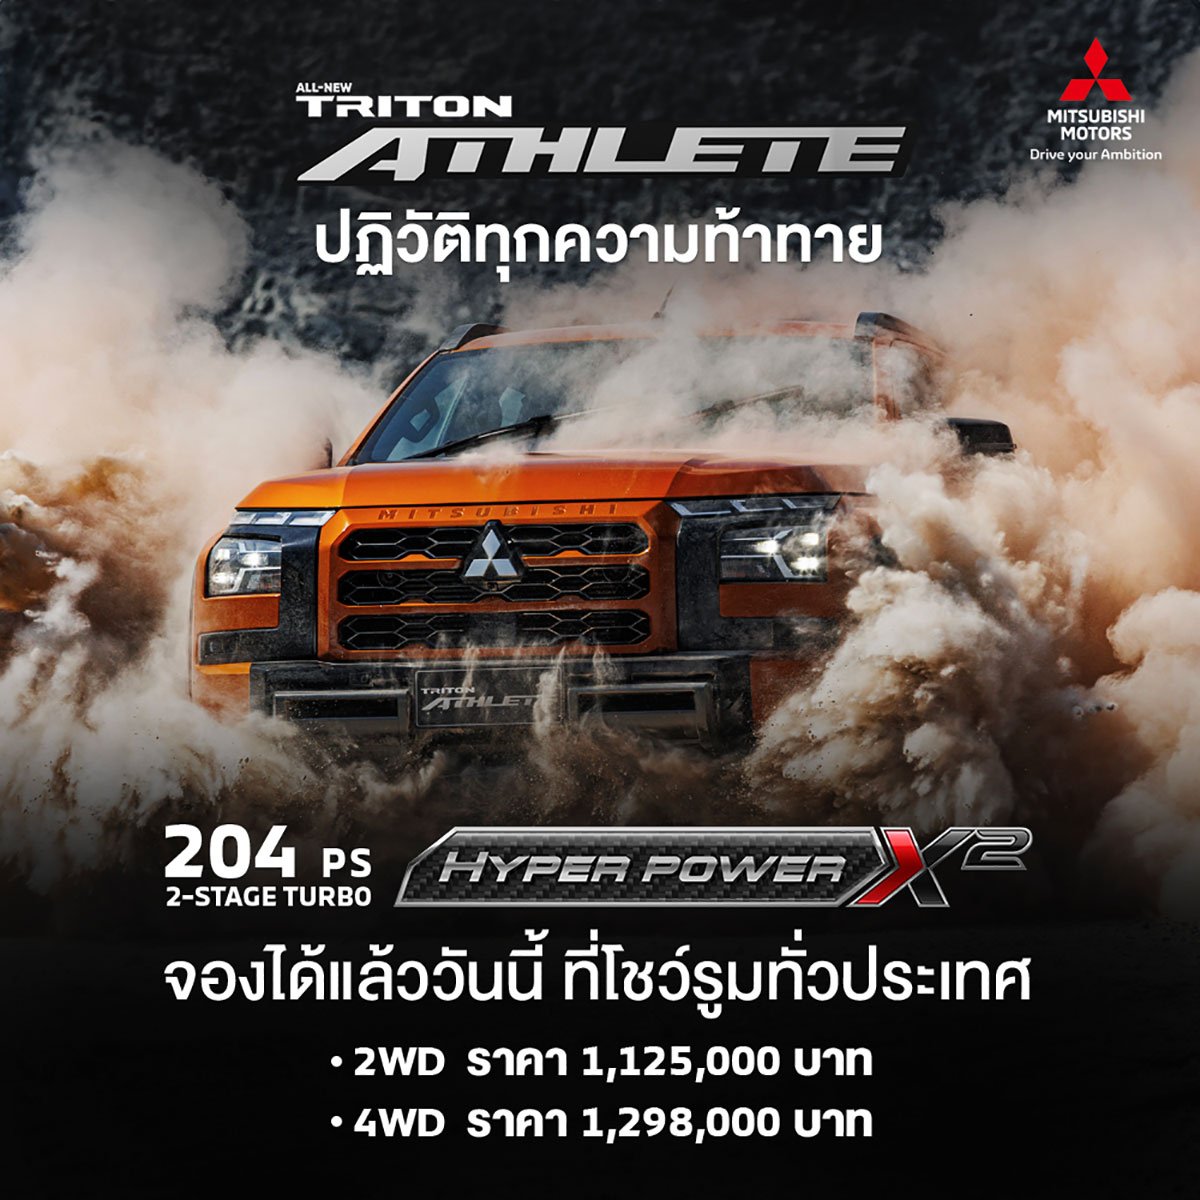 All-New Mitsubishi Triton Athlete Price